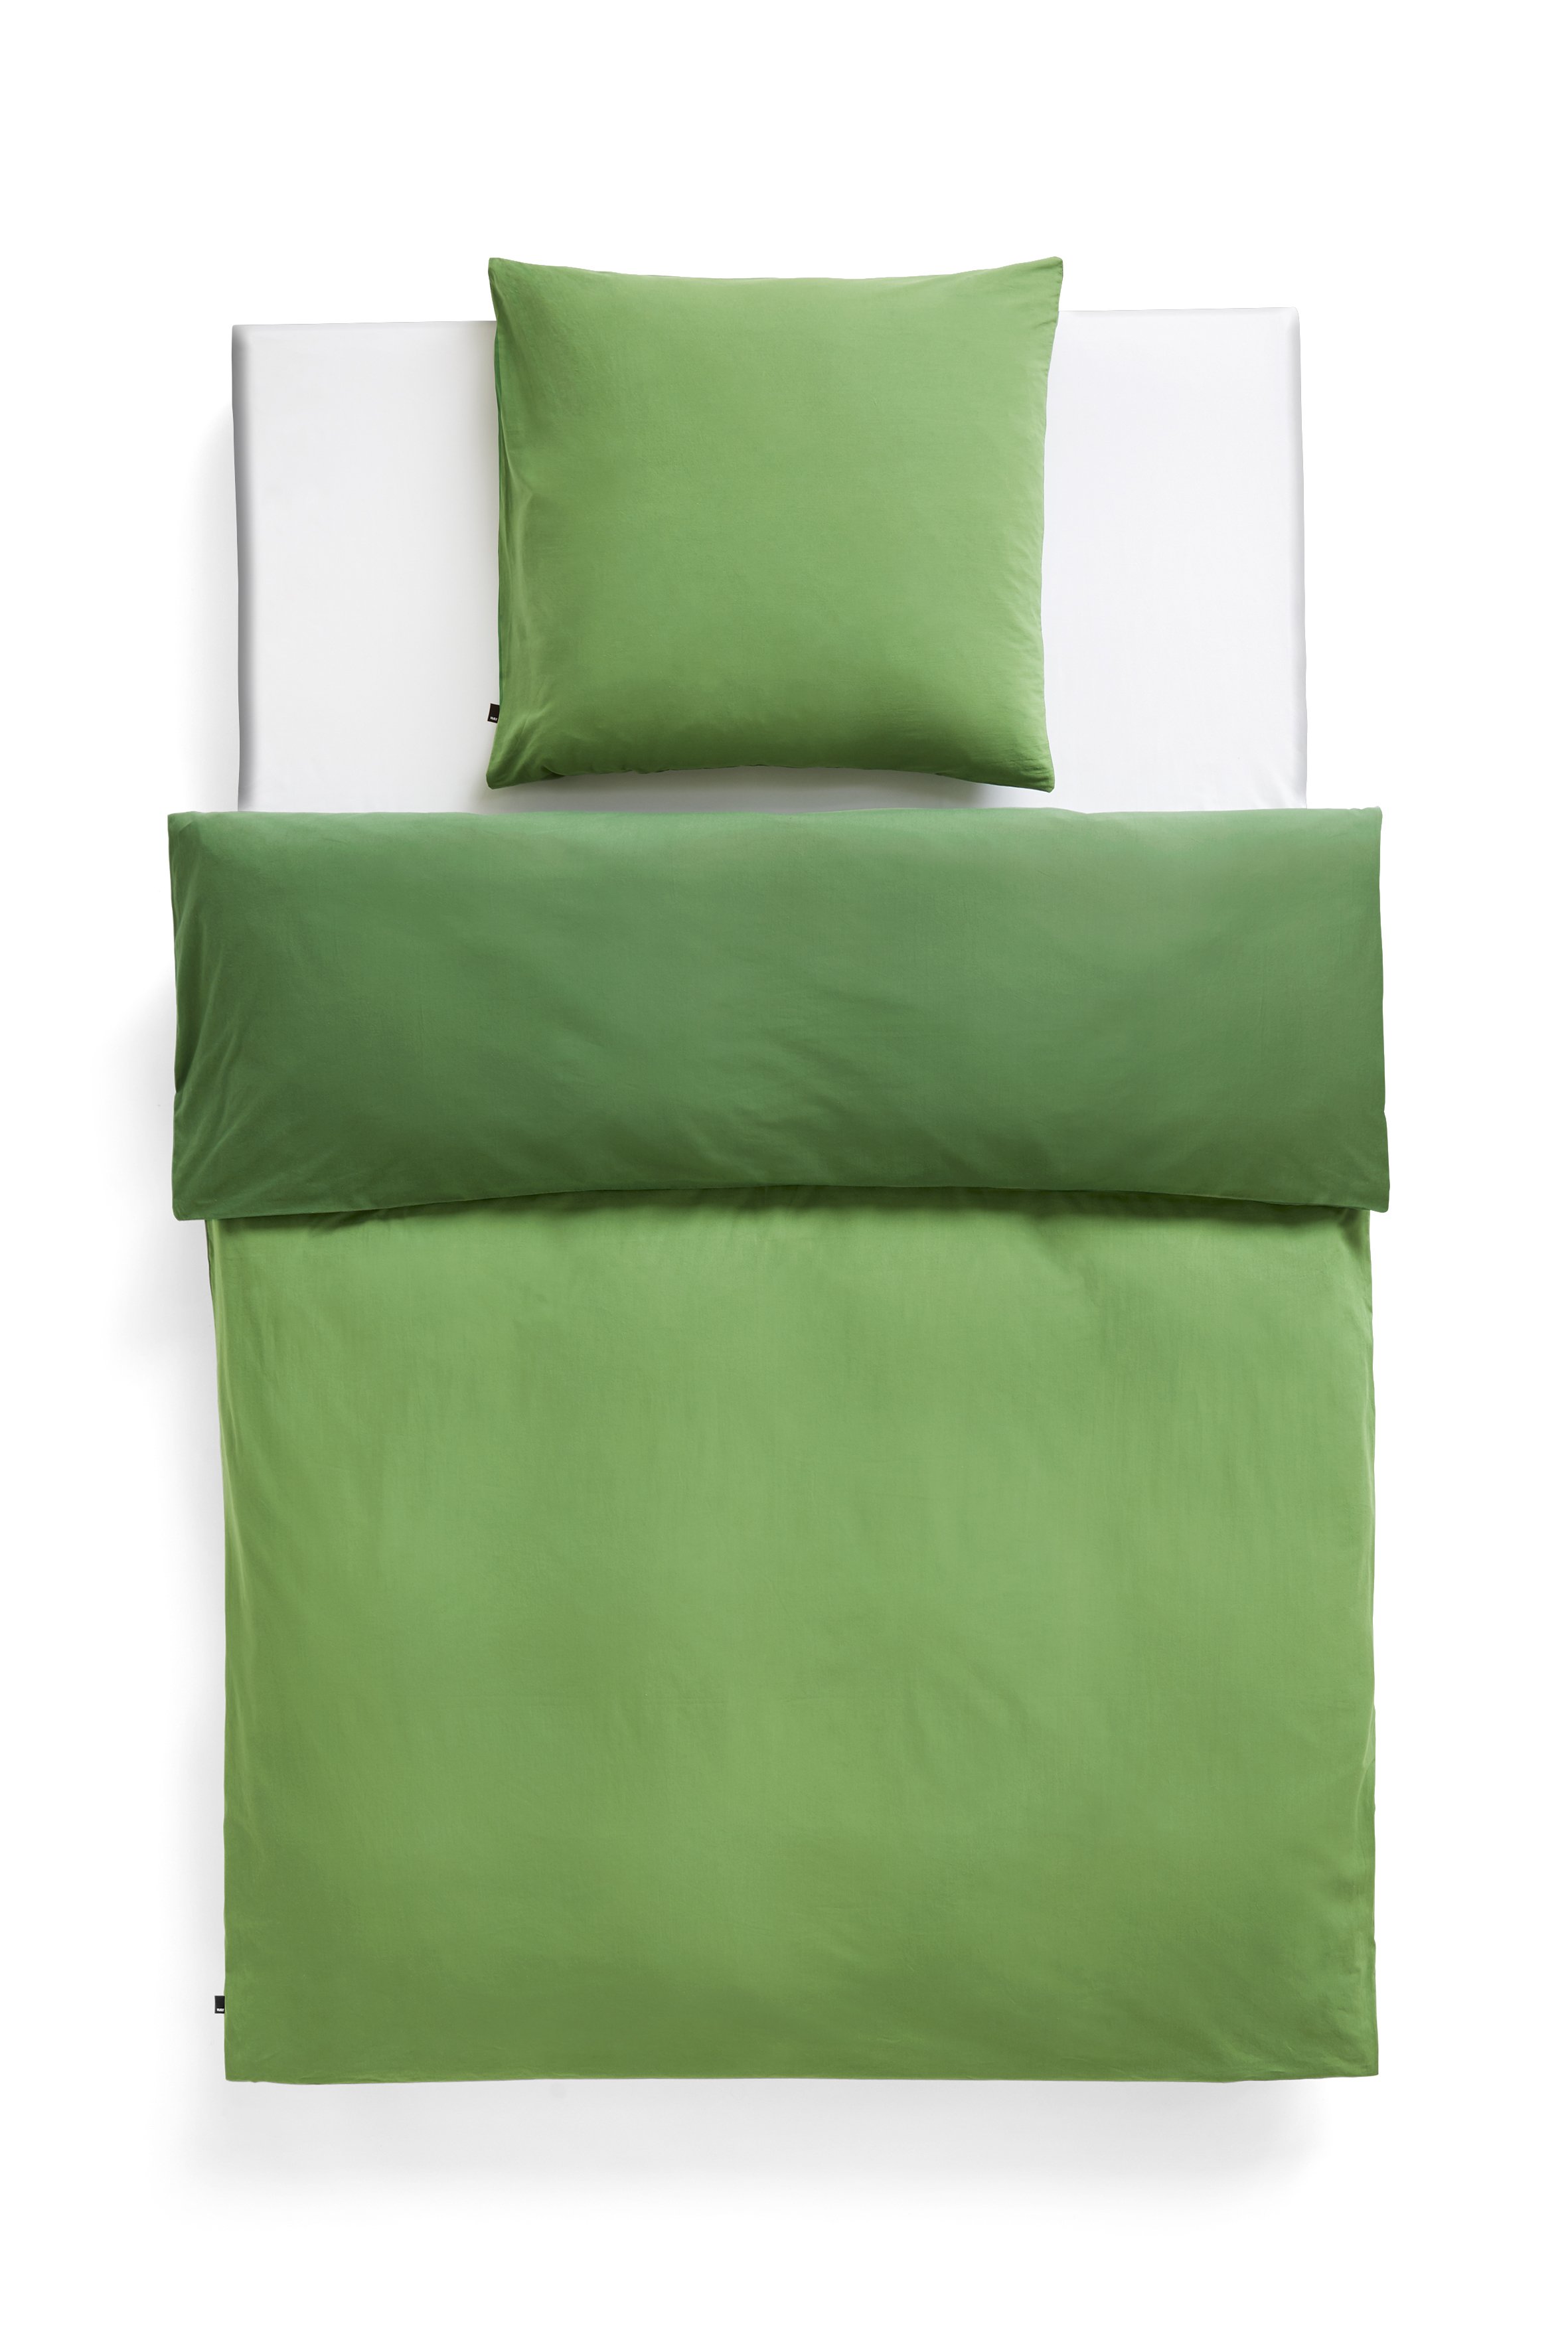 Duo Duvet Cover_Duo Pillow Case_matcha.jpg